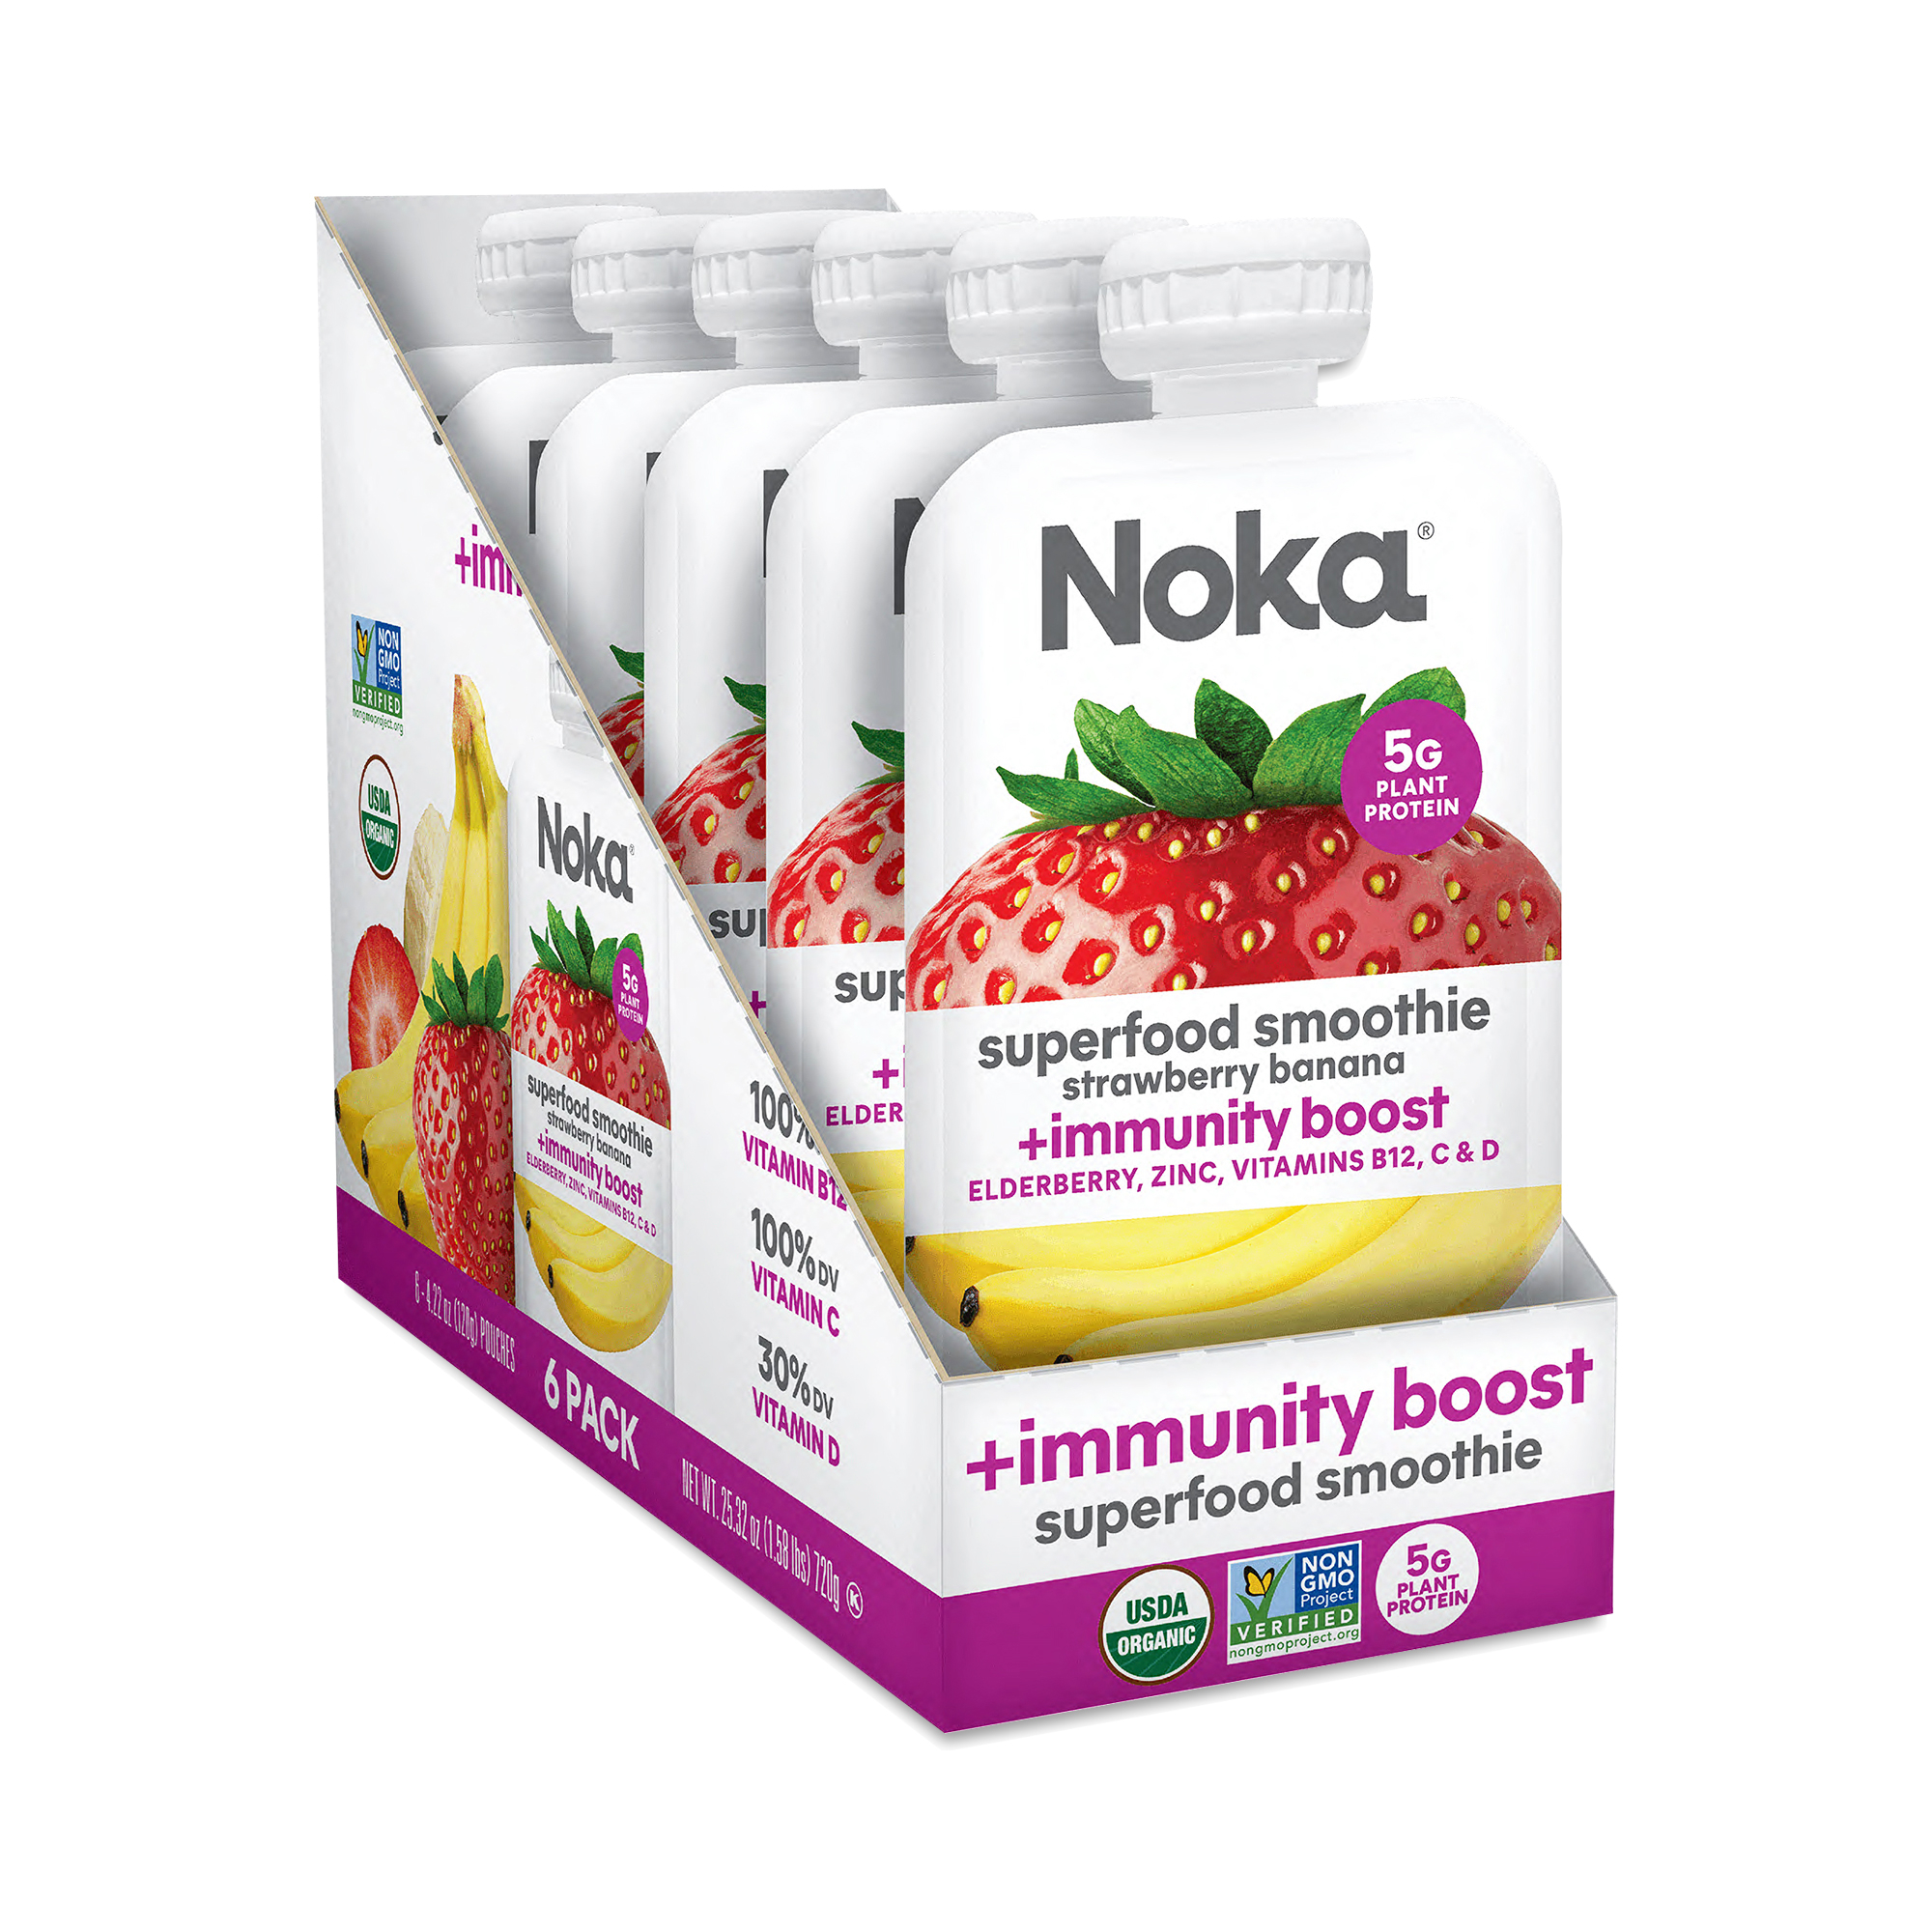 NOKA Organic Superfood Smoothie, Immunity Boost Strawberry Banana 6 pouches (4.22 oz each)